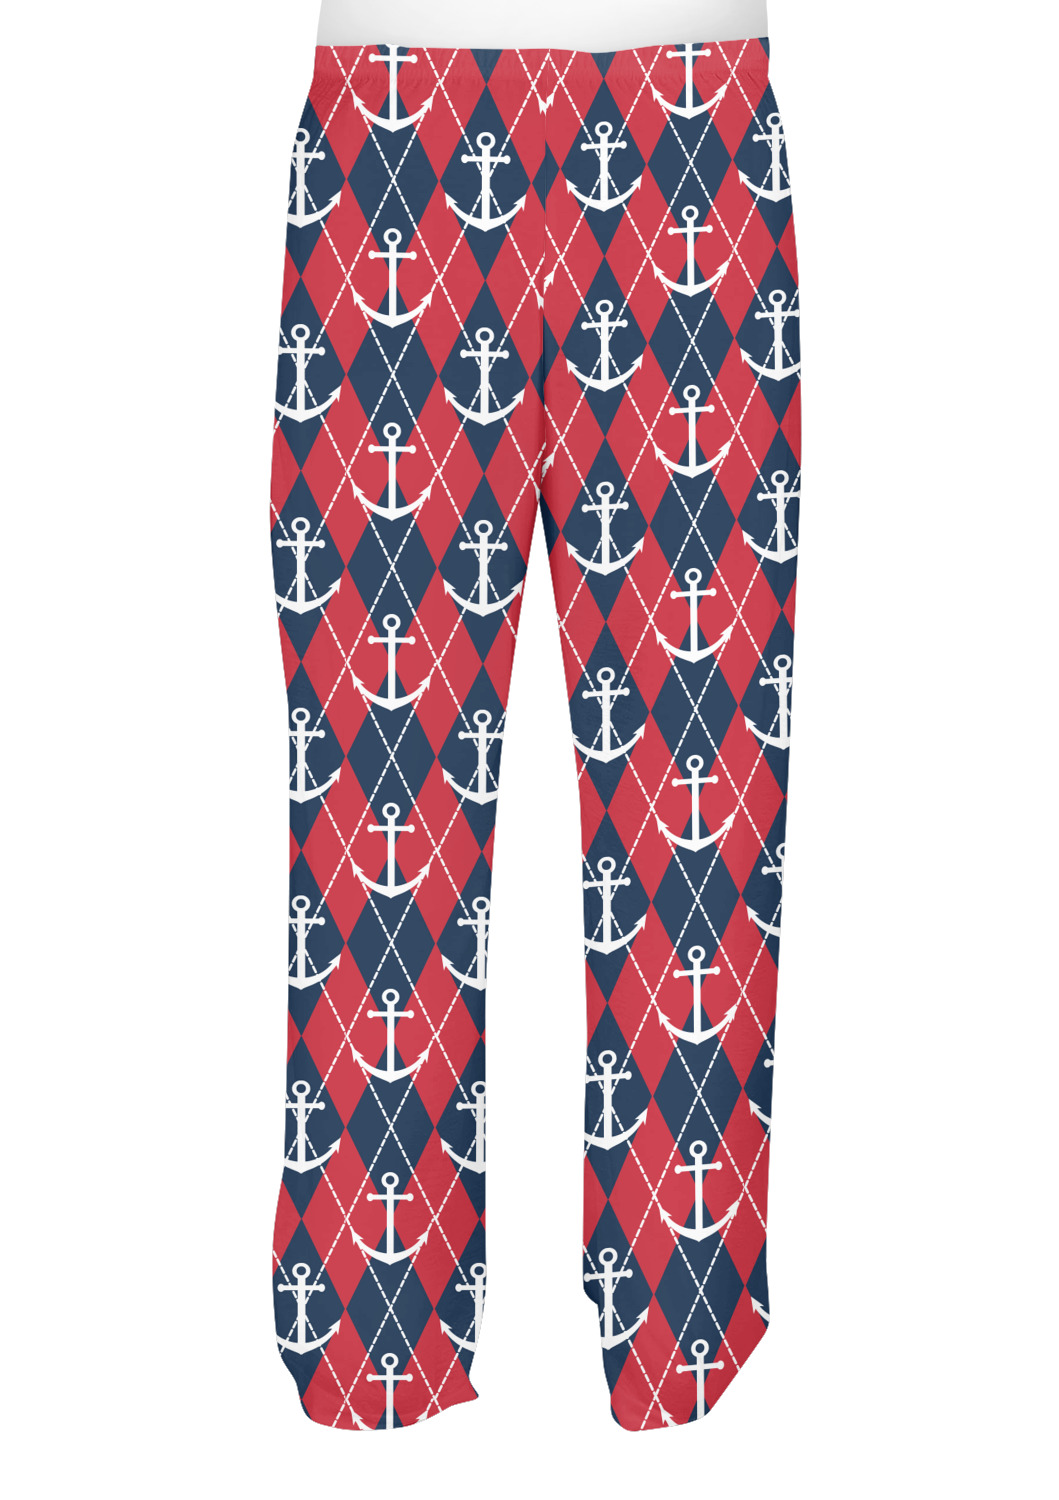 Anchors & Argyle Mens Pajama Pants (Personalized) - YouCustomizeIt